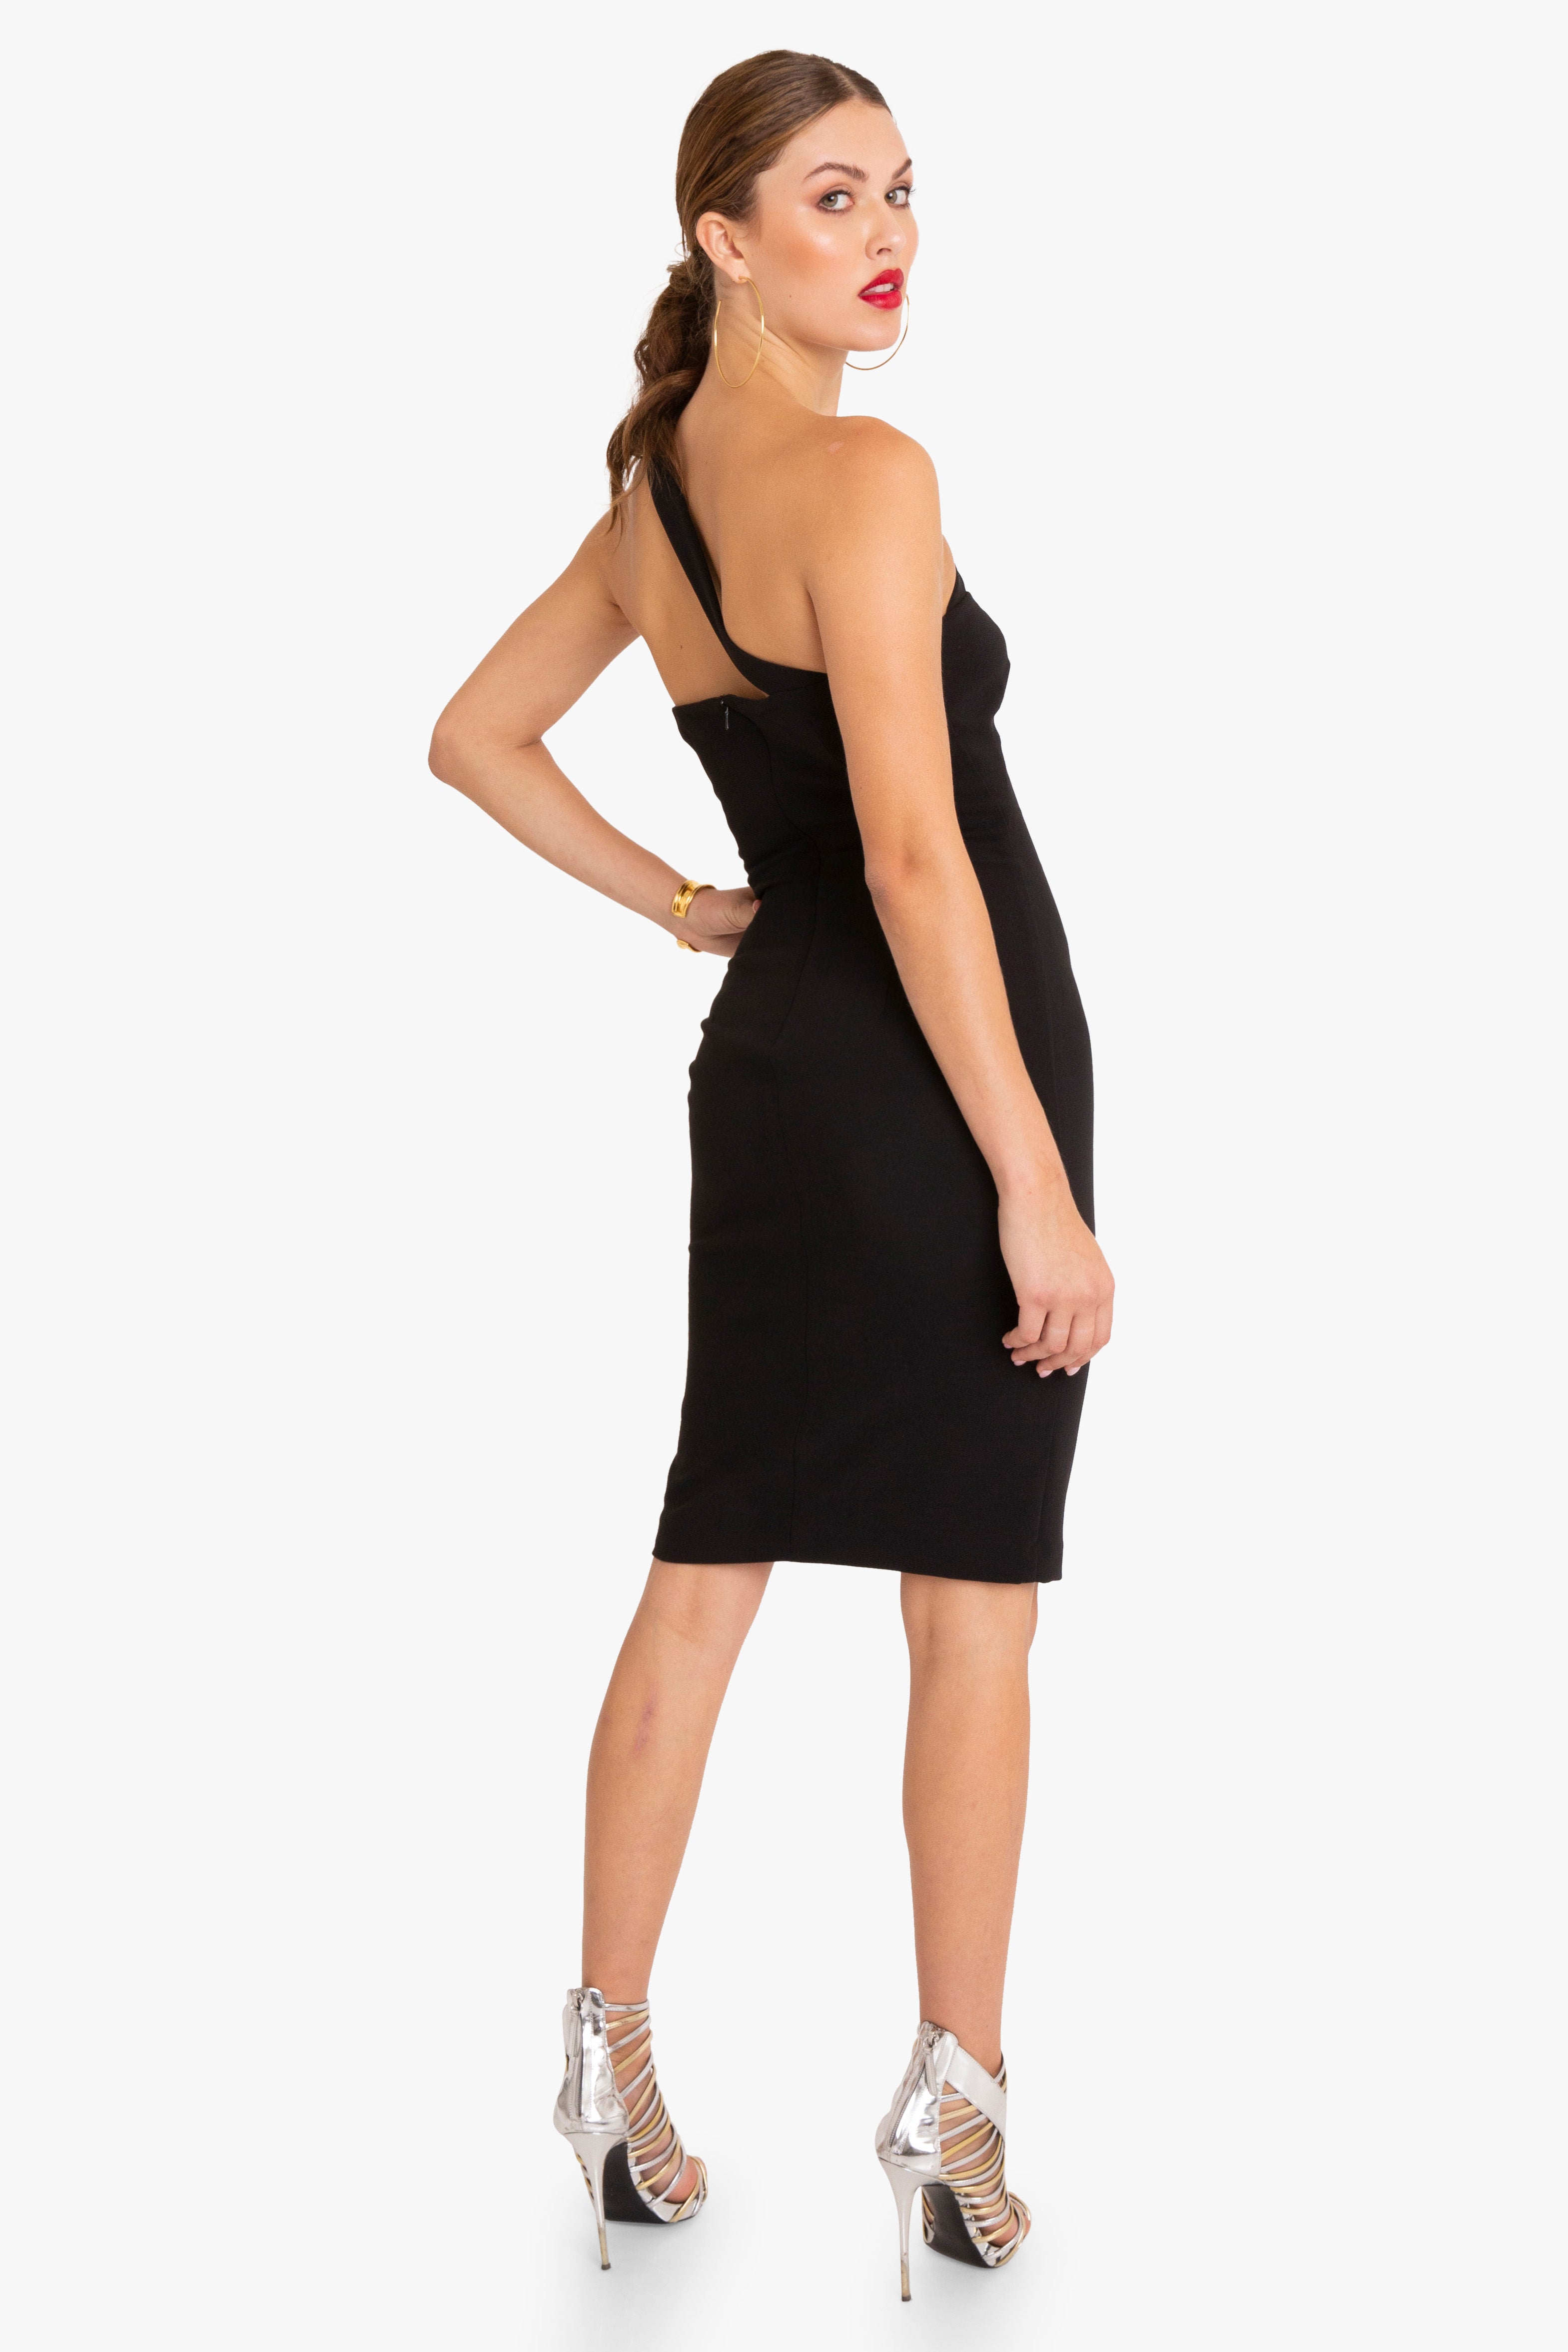 Anthropologie Black Halo Strapless Cutout Dress Black Size 2 $400